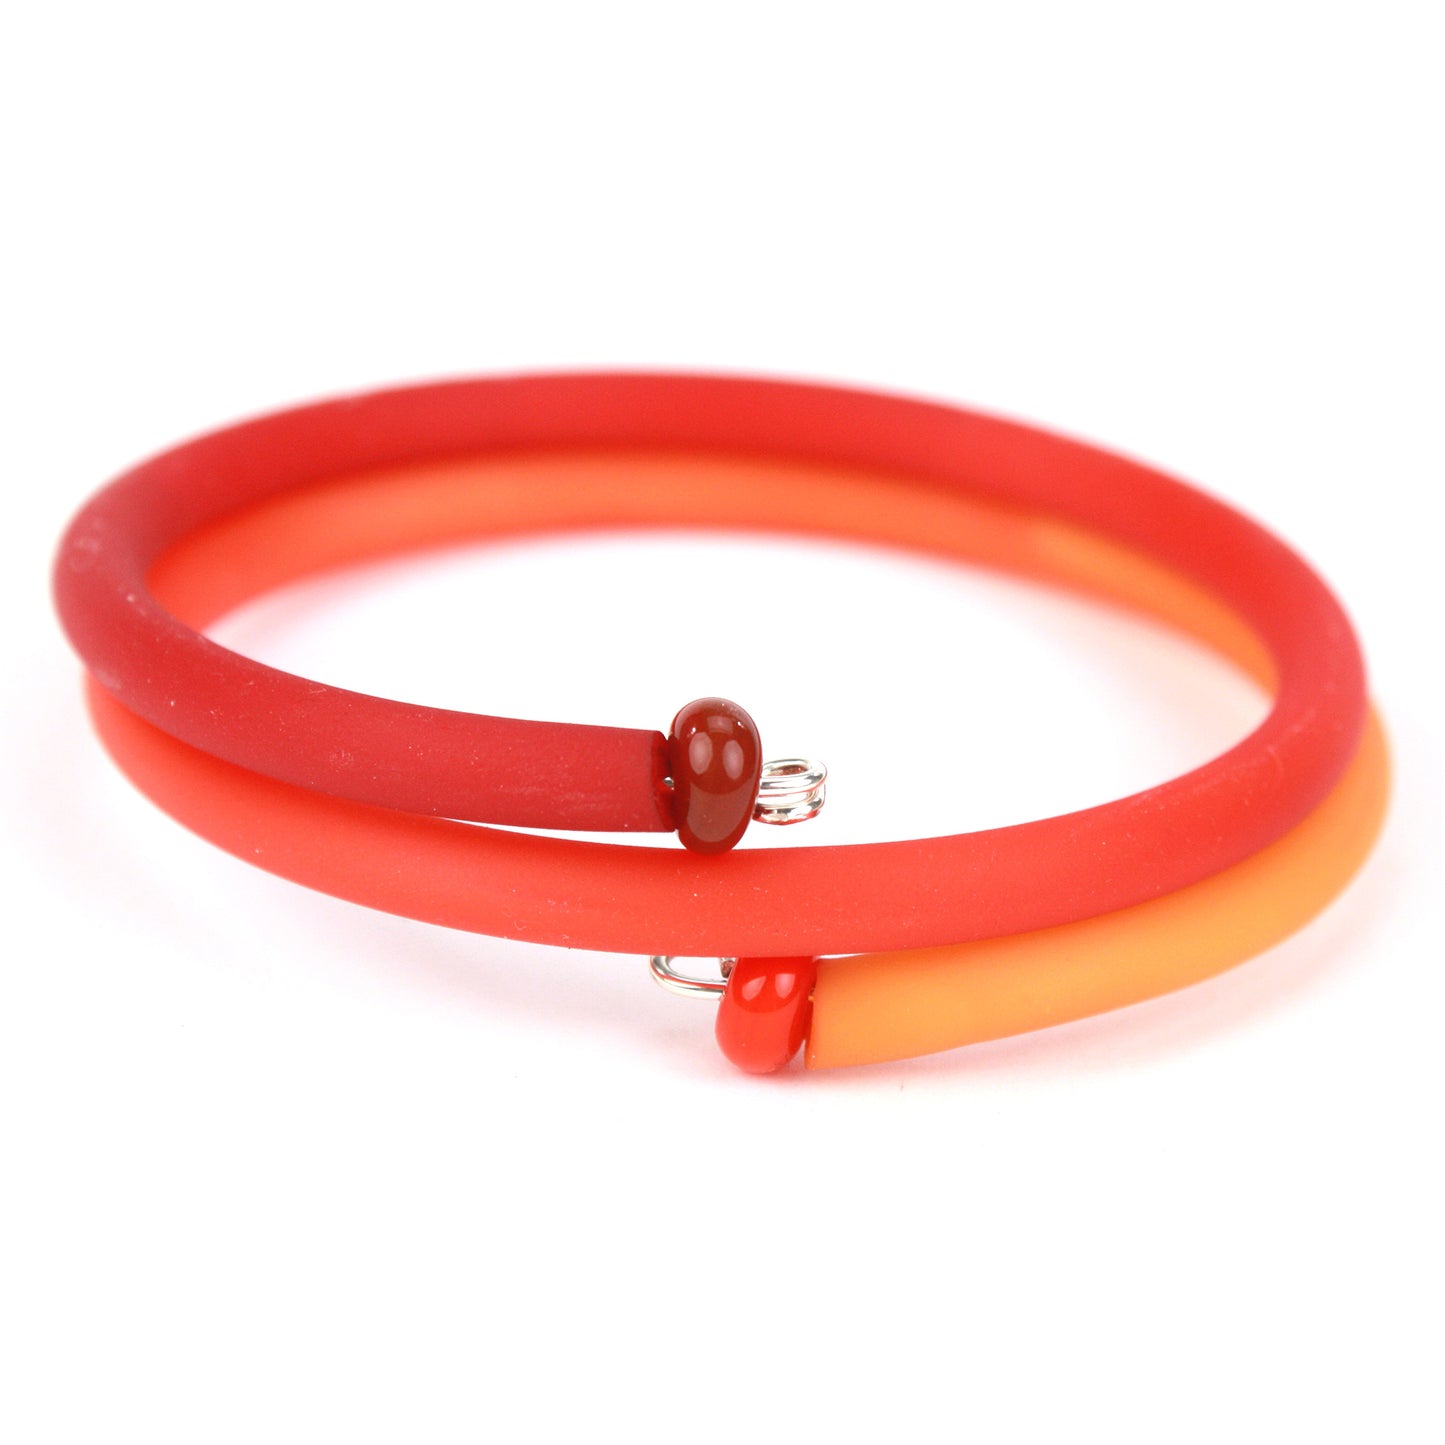 Double wrap bracelet - Light red and orange